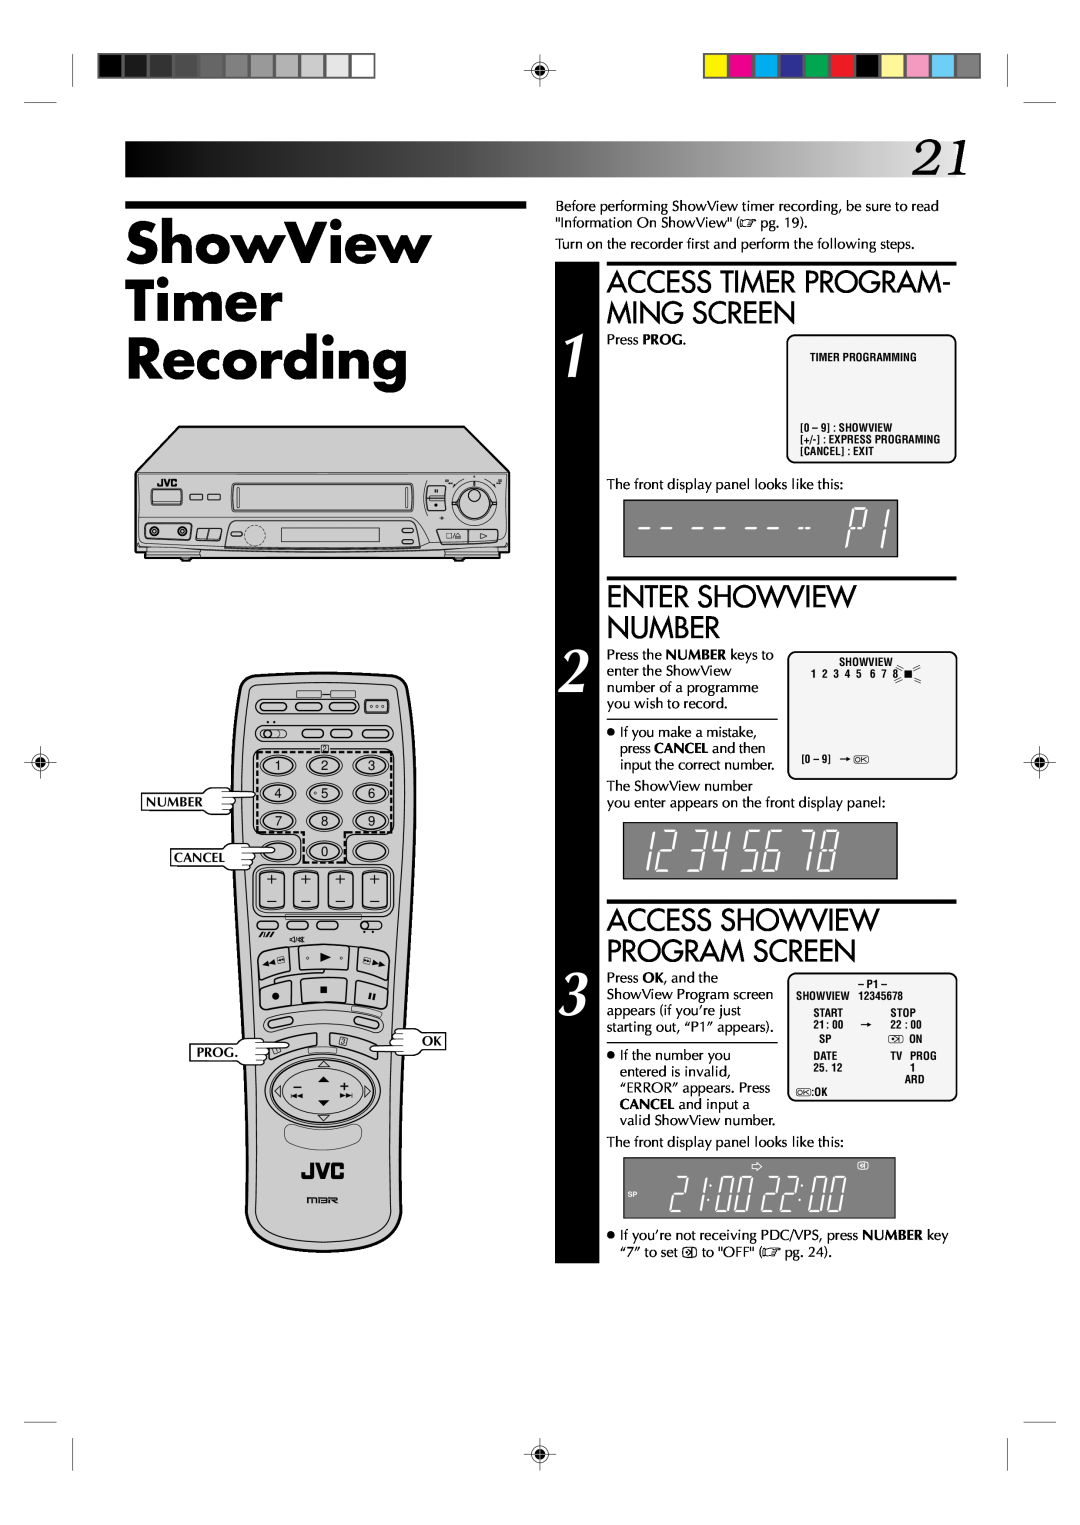 JVC HR-J238E, HR-J438E ShowView Timer Recording, Access Showview, Program Screen, Press PROG, input the correct number 